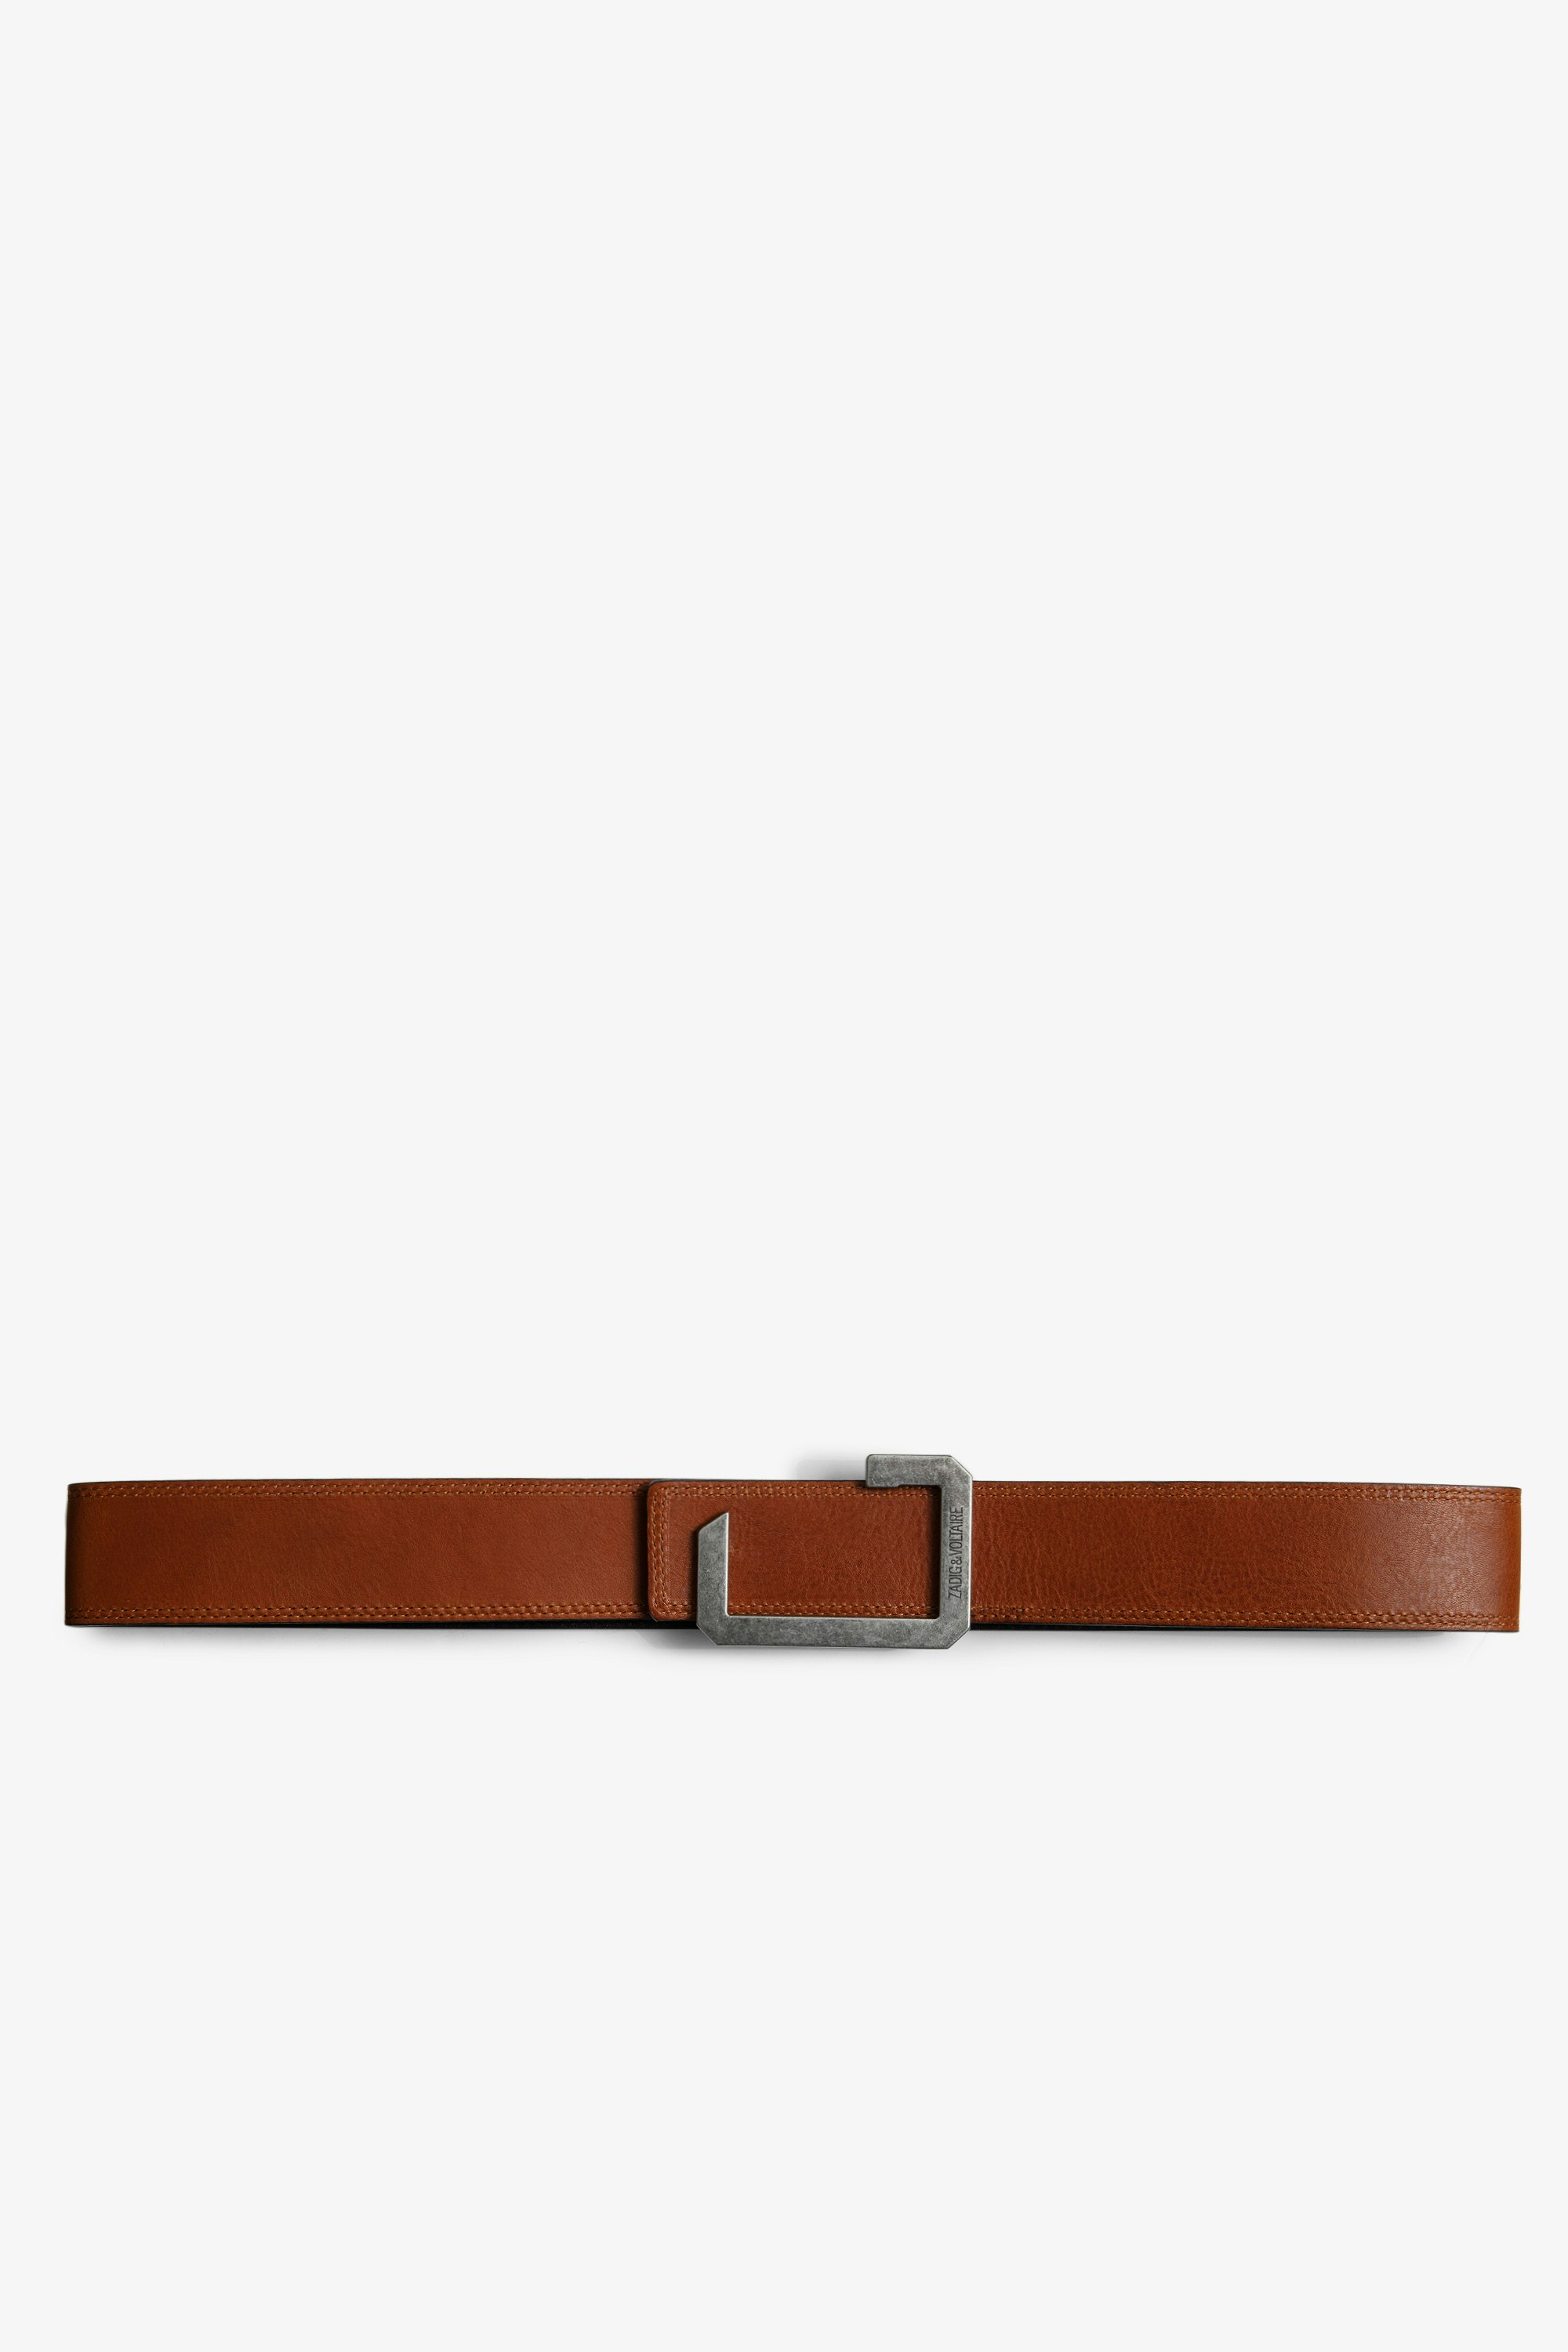 The Reversible Belt Men's reversible cognac leather belt.